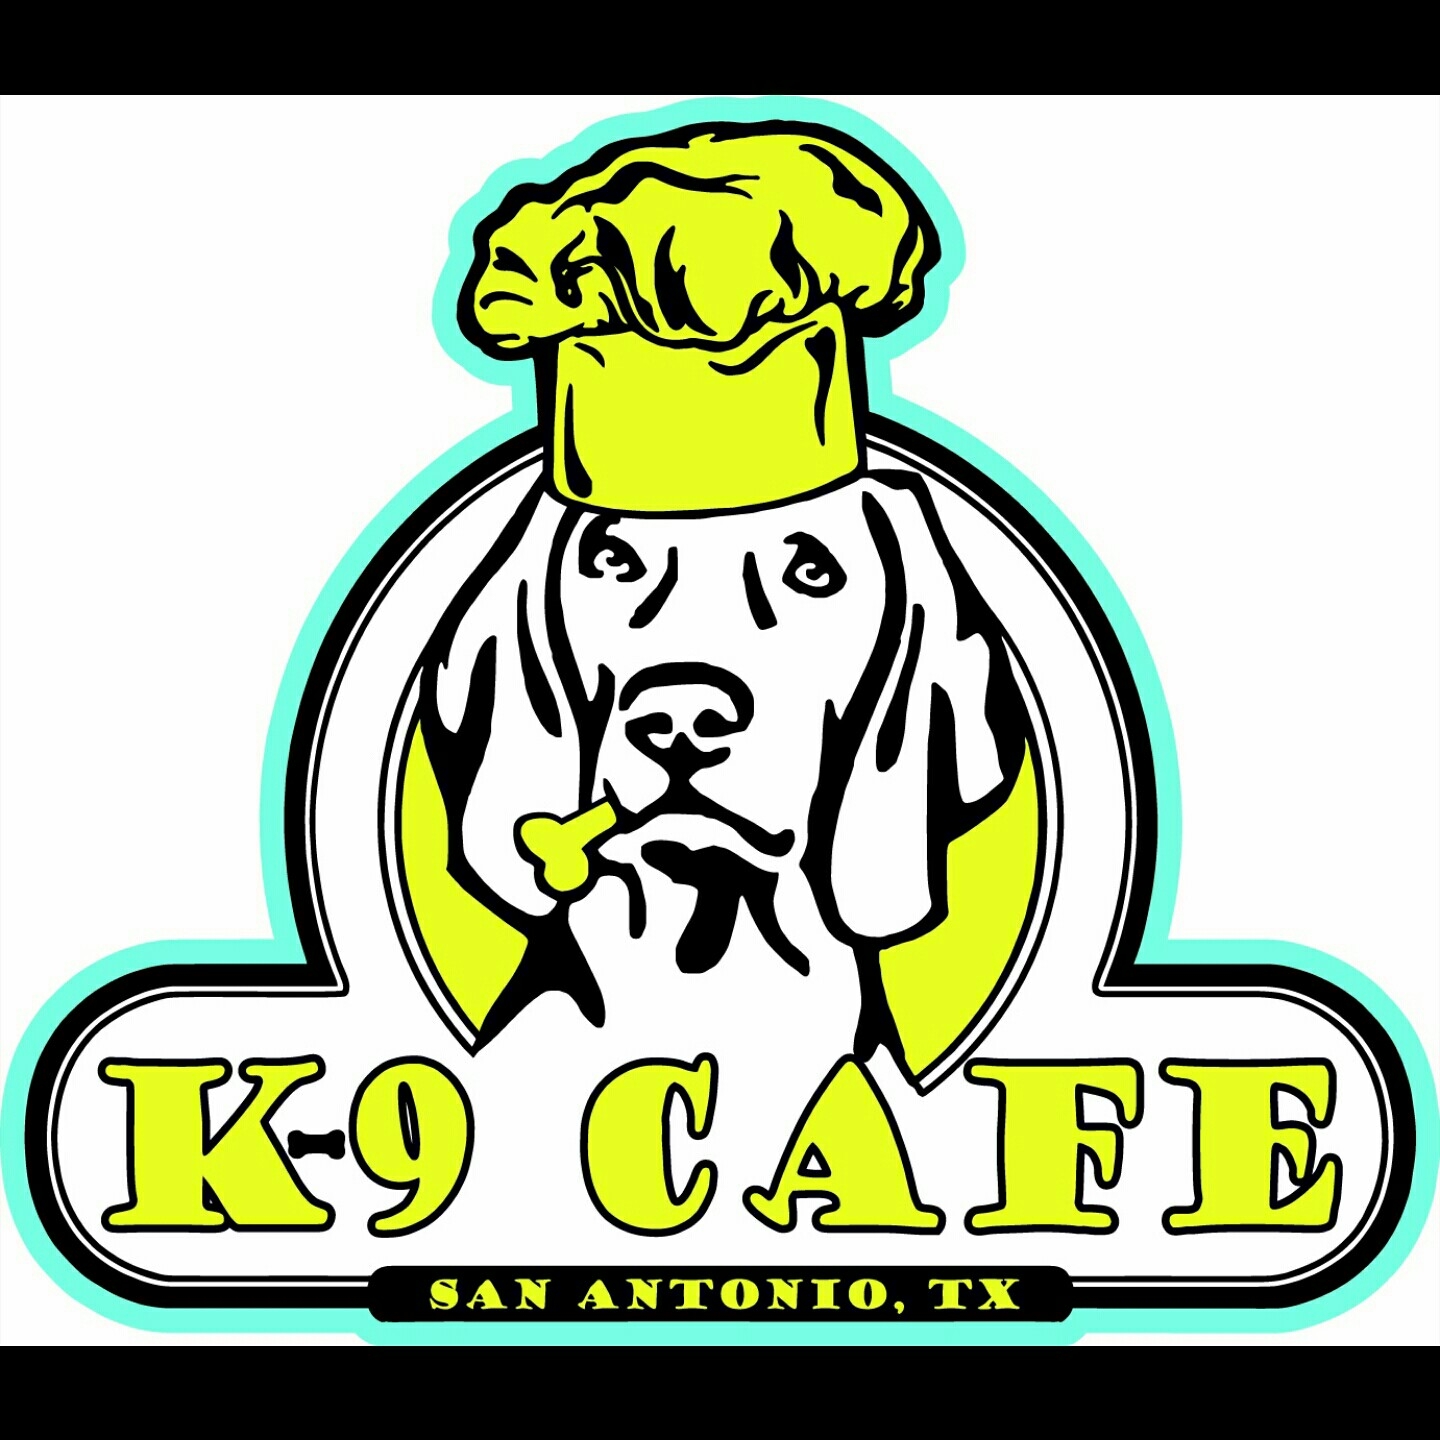 Company logo of K9 Cafe Boutique & Spa